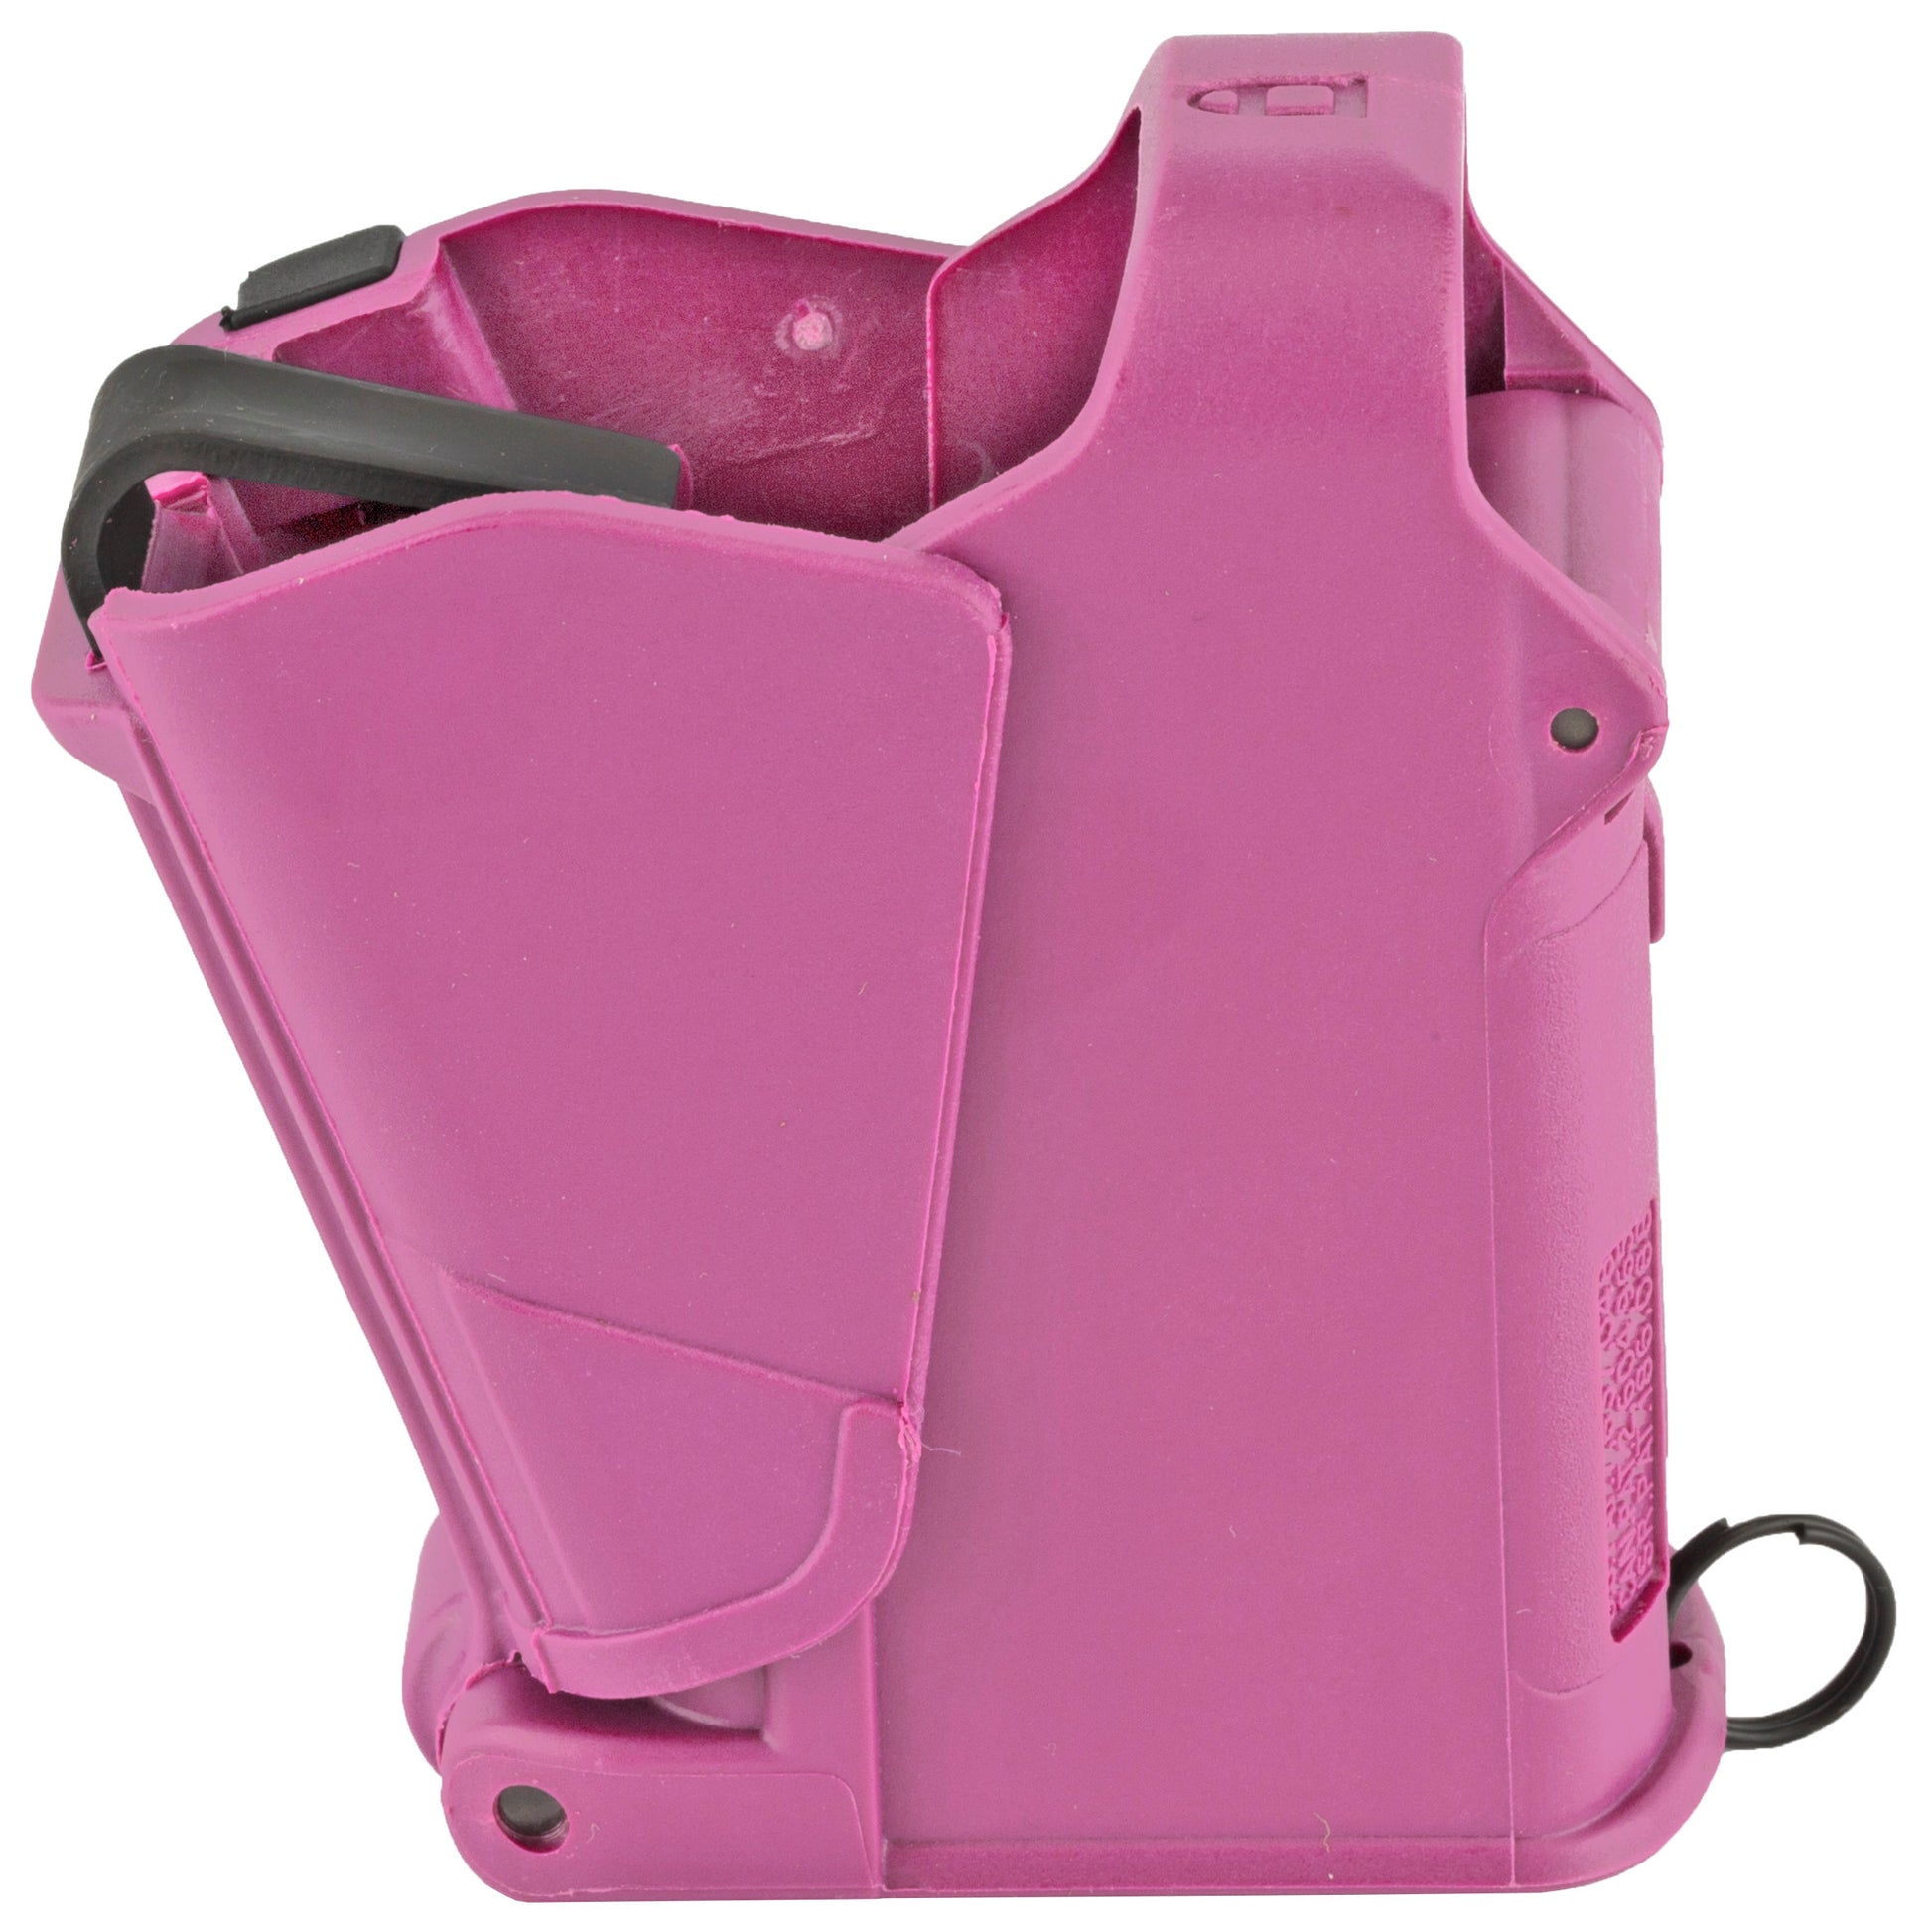 Maglula ltd UpLula Magazine Loader/Unloader 45 ACP Fits 9mm-45 ACP Pink UP60P - California Shooting Supplies